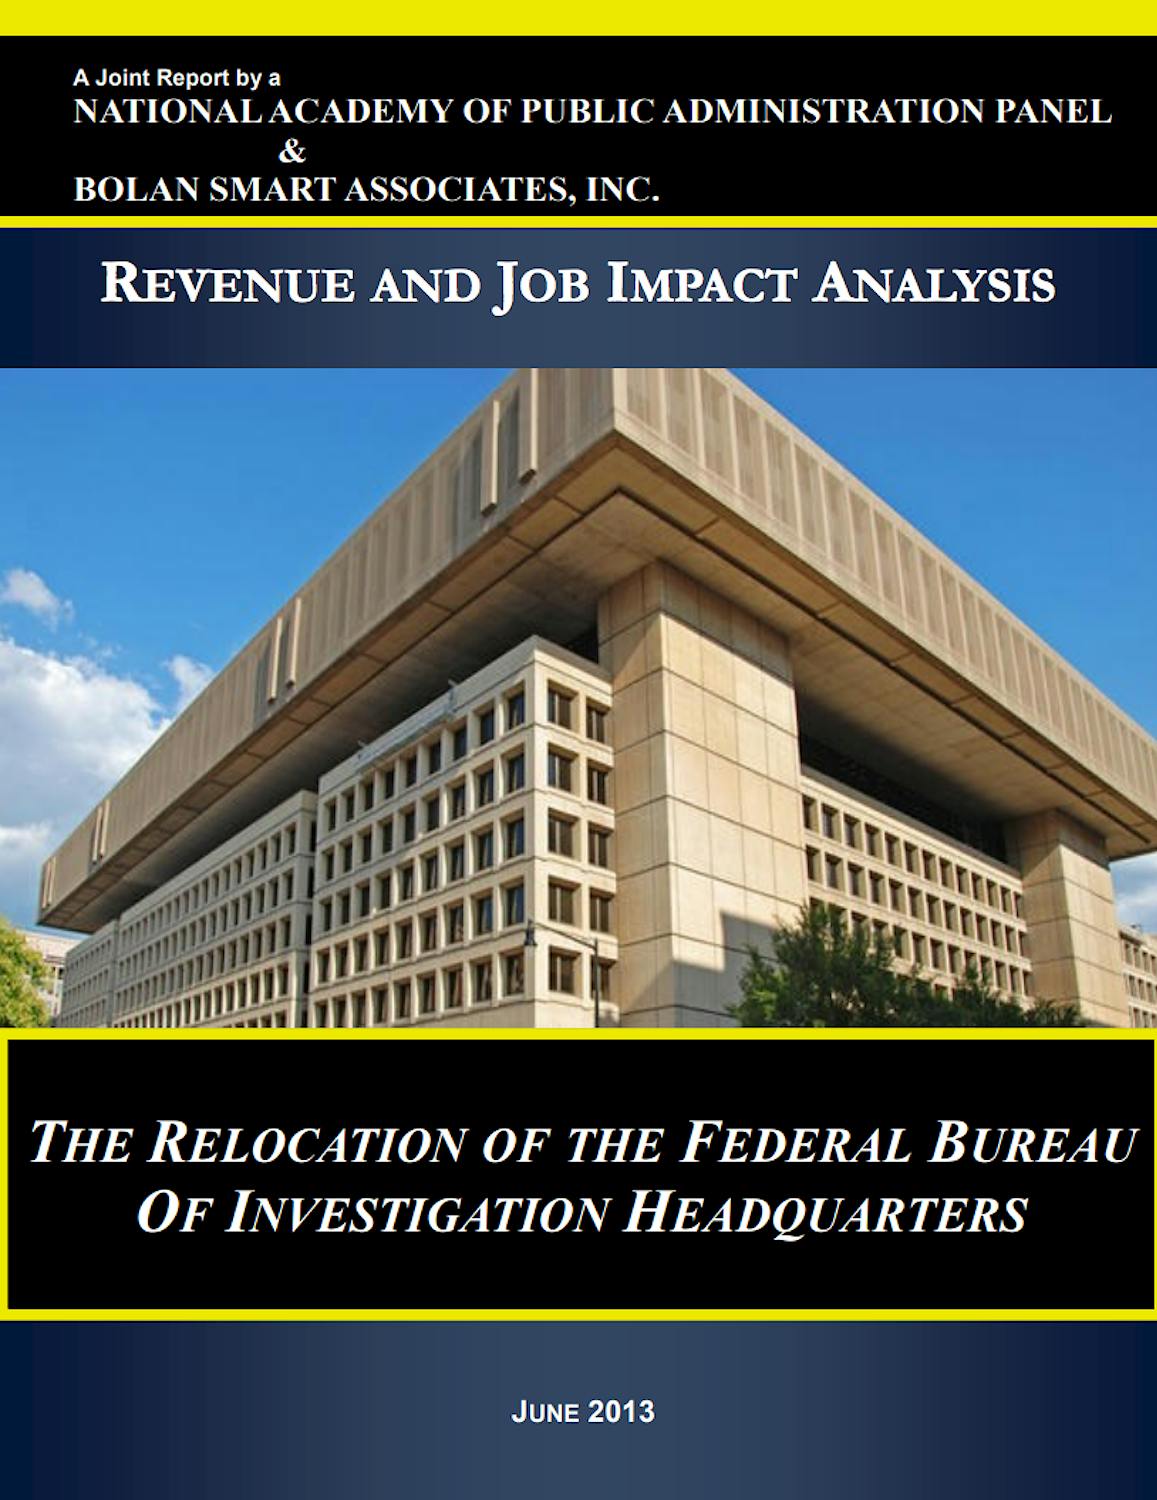 FBI Headquaters Relocation Final Report 7 12